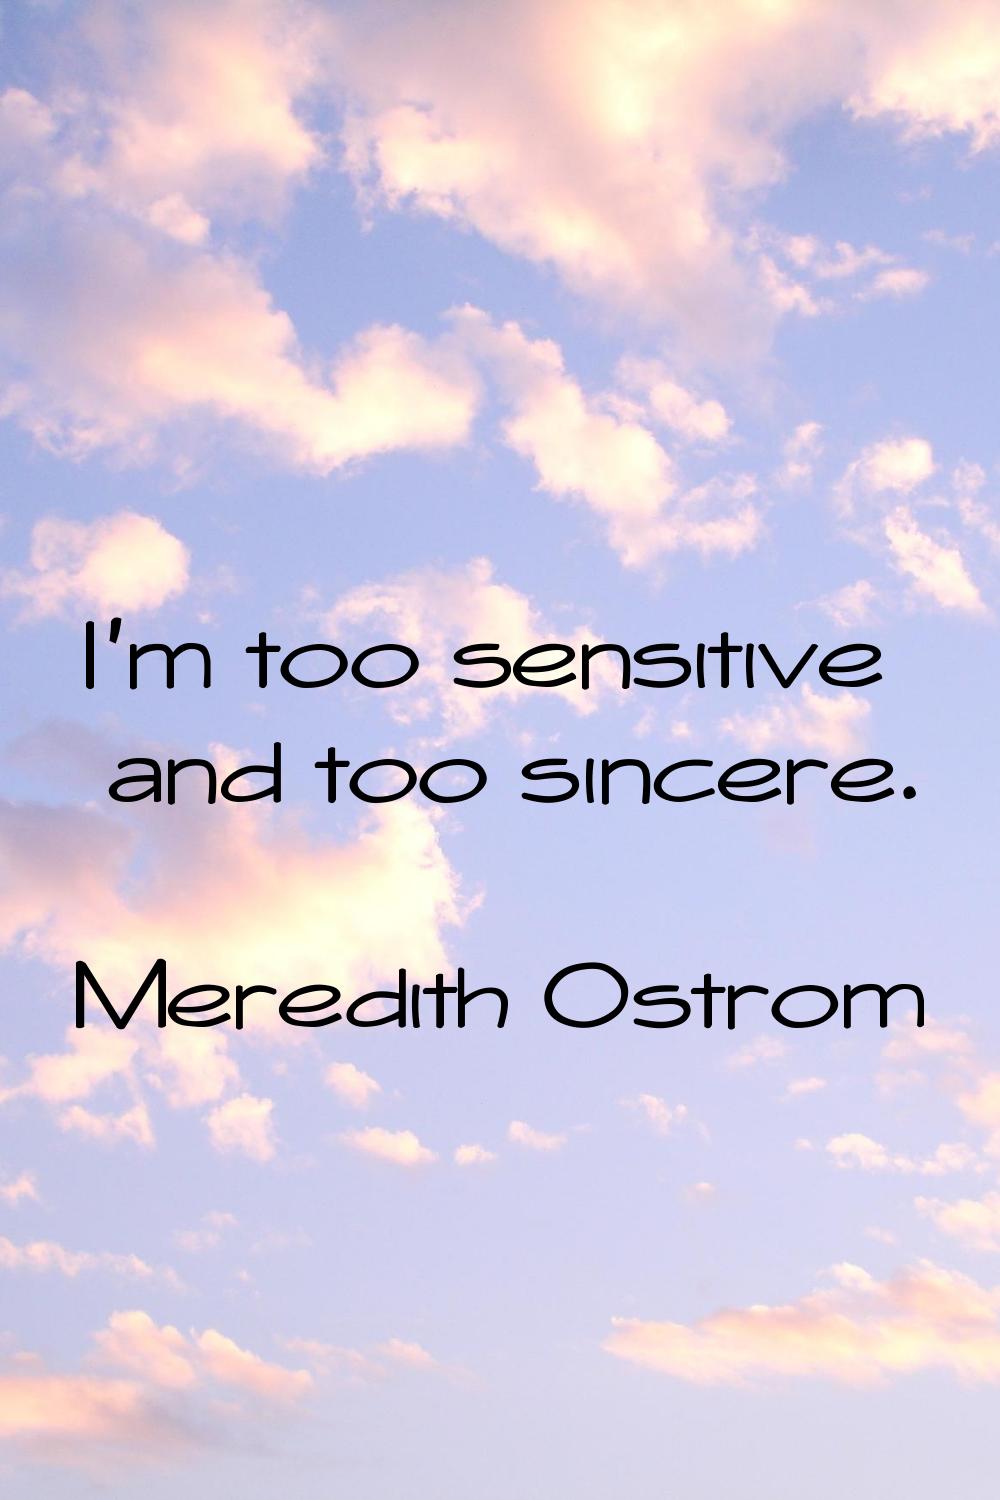 I'm too sensitive and too sincere.